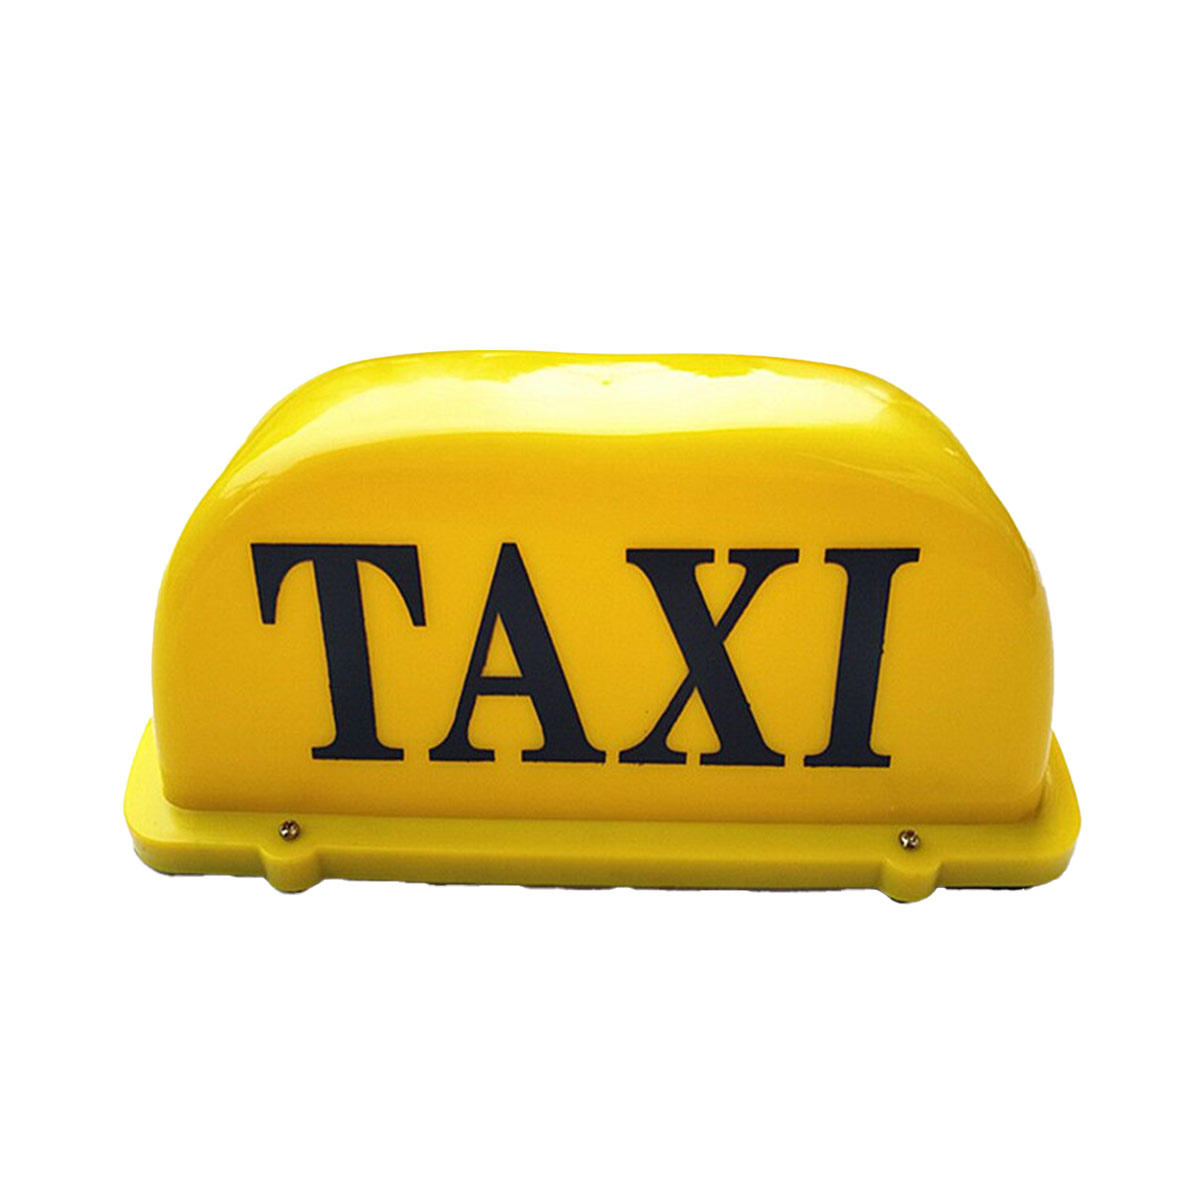 Taxi Light Box